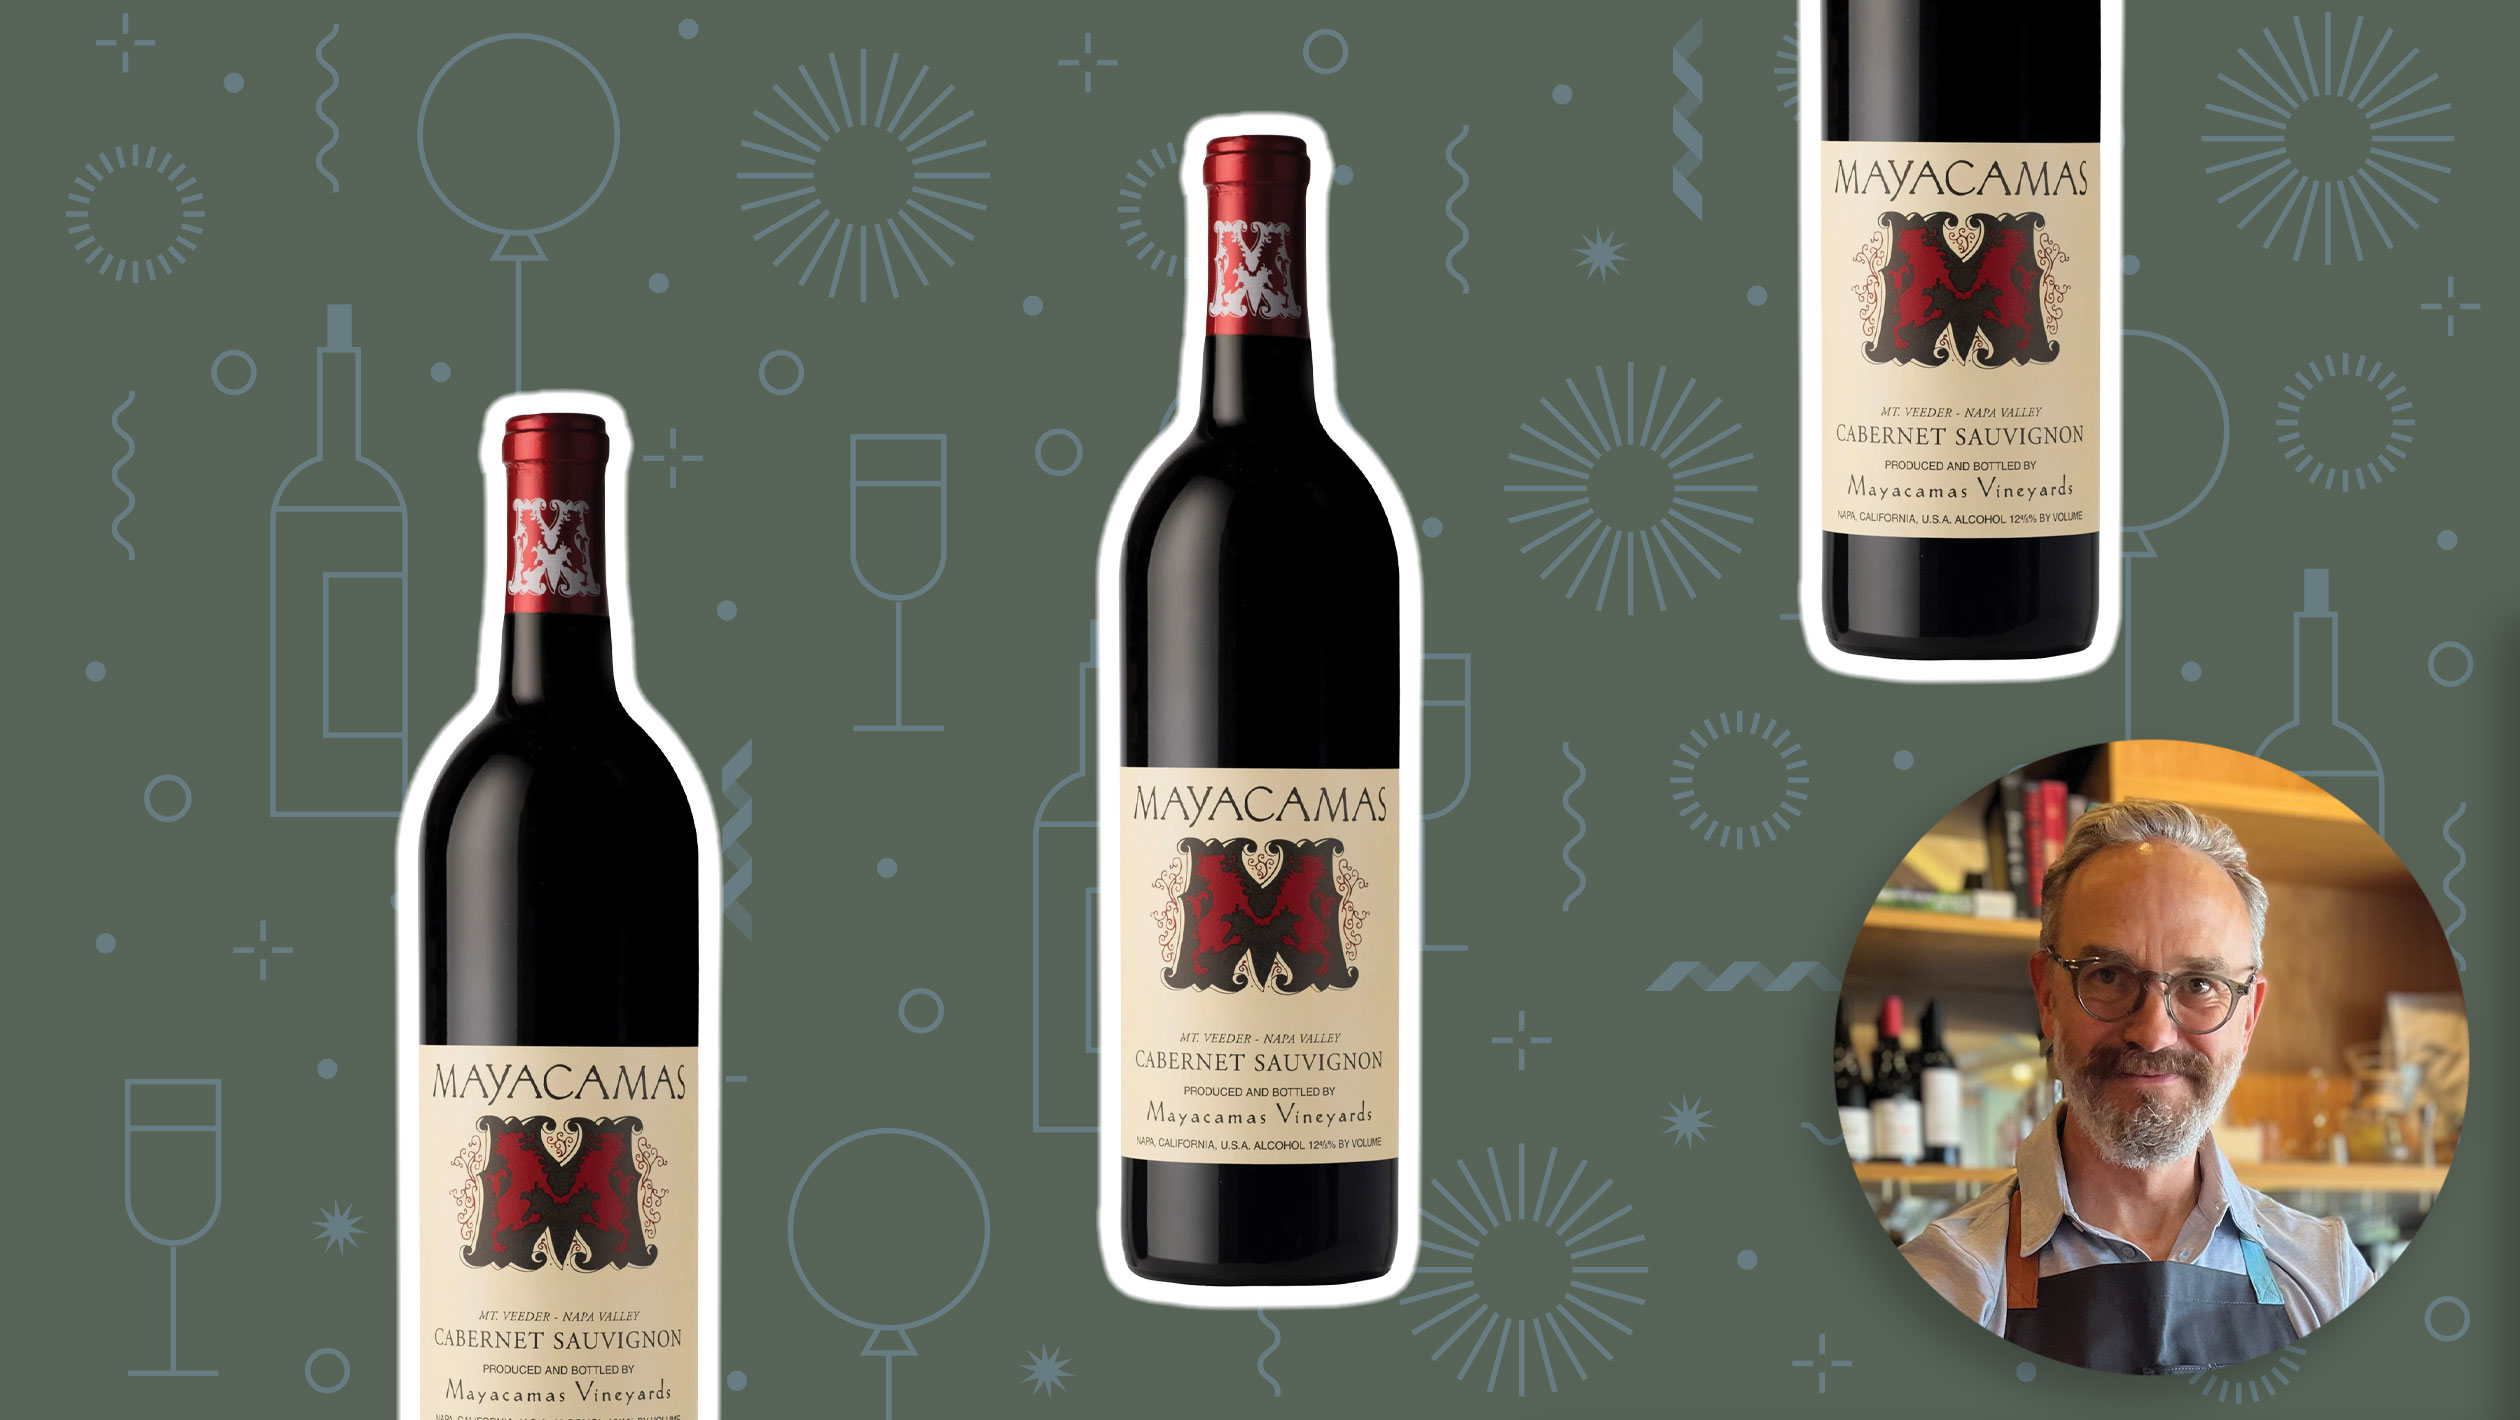 Mayacamas Vineyards Cabernet Sauvignon 2018, selected by John Stanley, owner of Stanley’s Wet Goods.